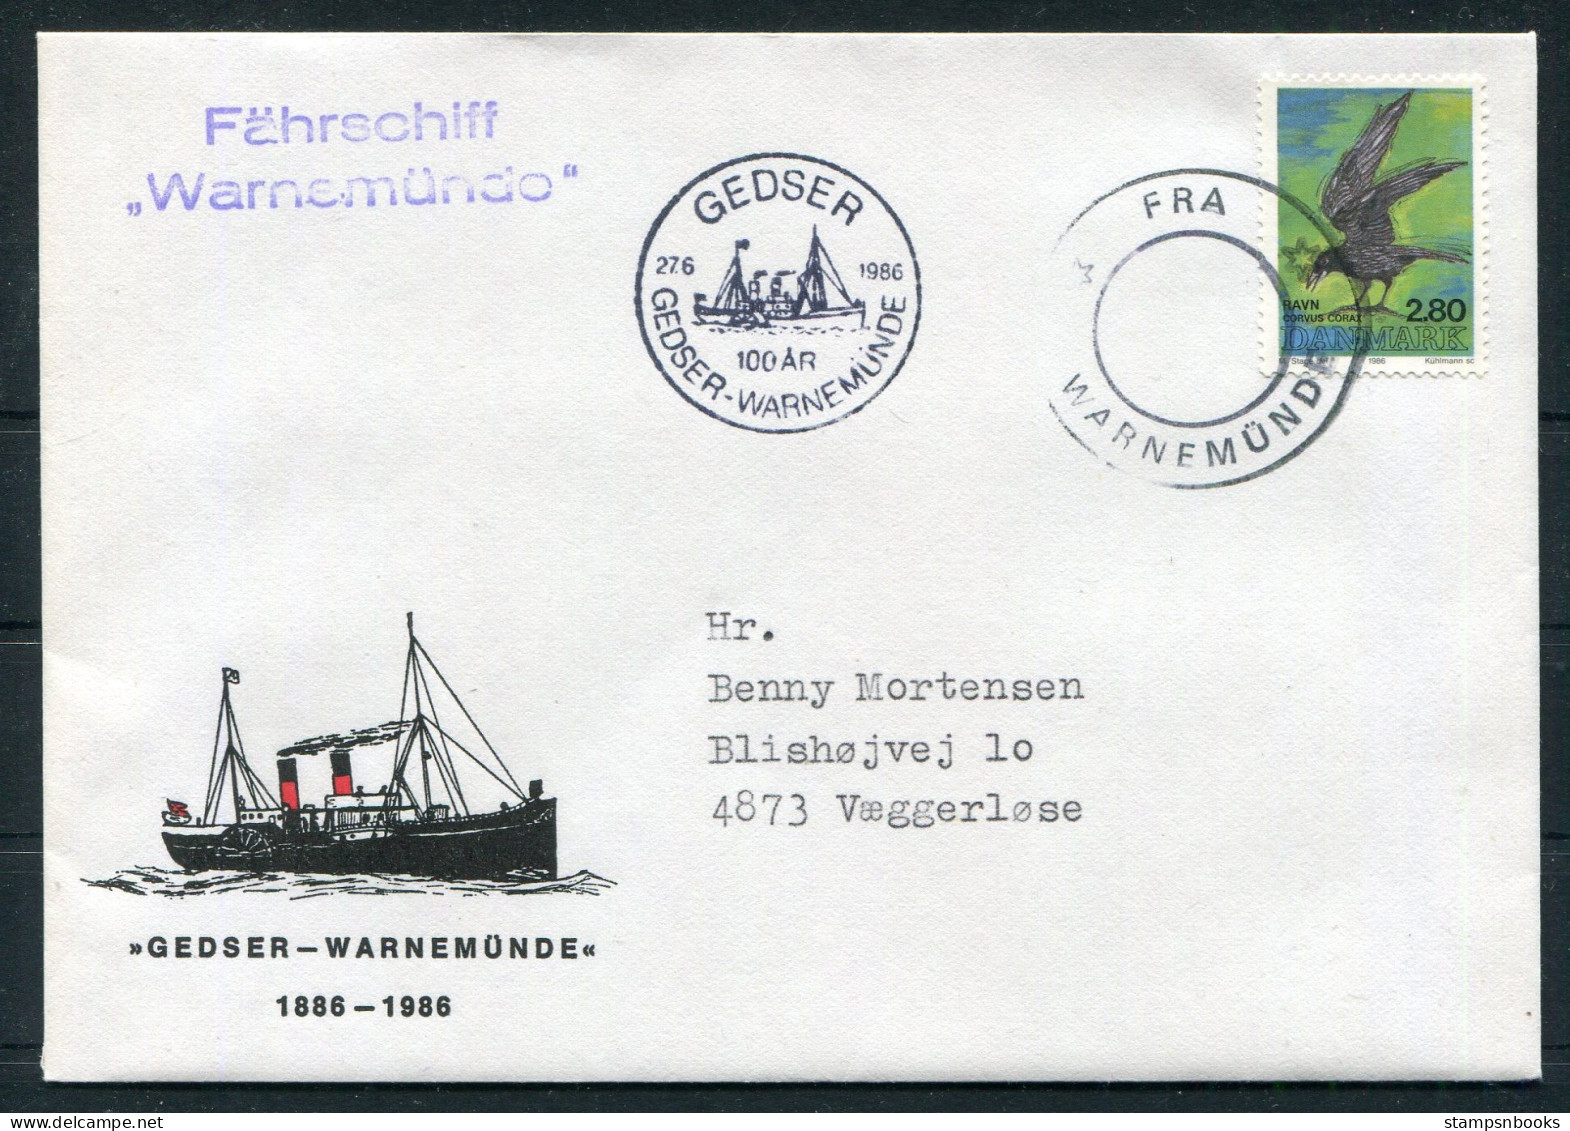 1986 Denmark Germany "Fra Warnemünde" Paquebot Gedser Fahrschiff "Warnemünde" Ship Cover. 2.80kr Birds - Storia Postale